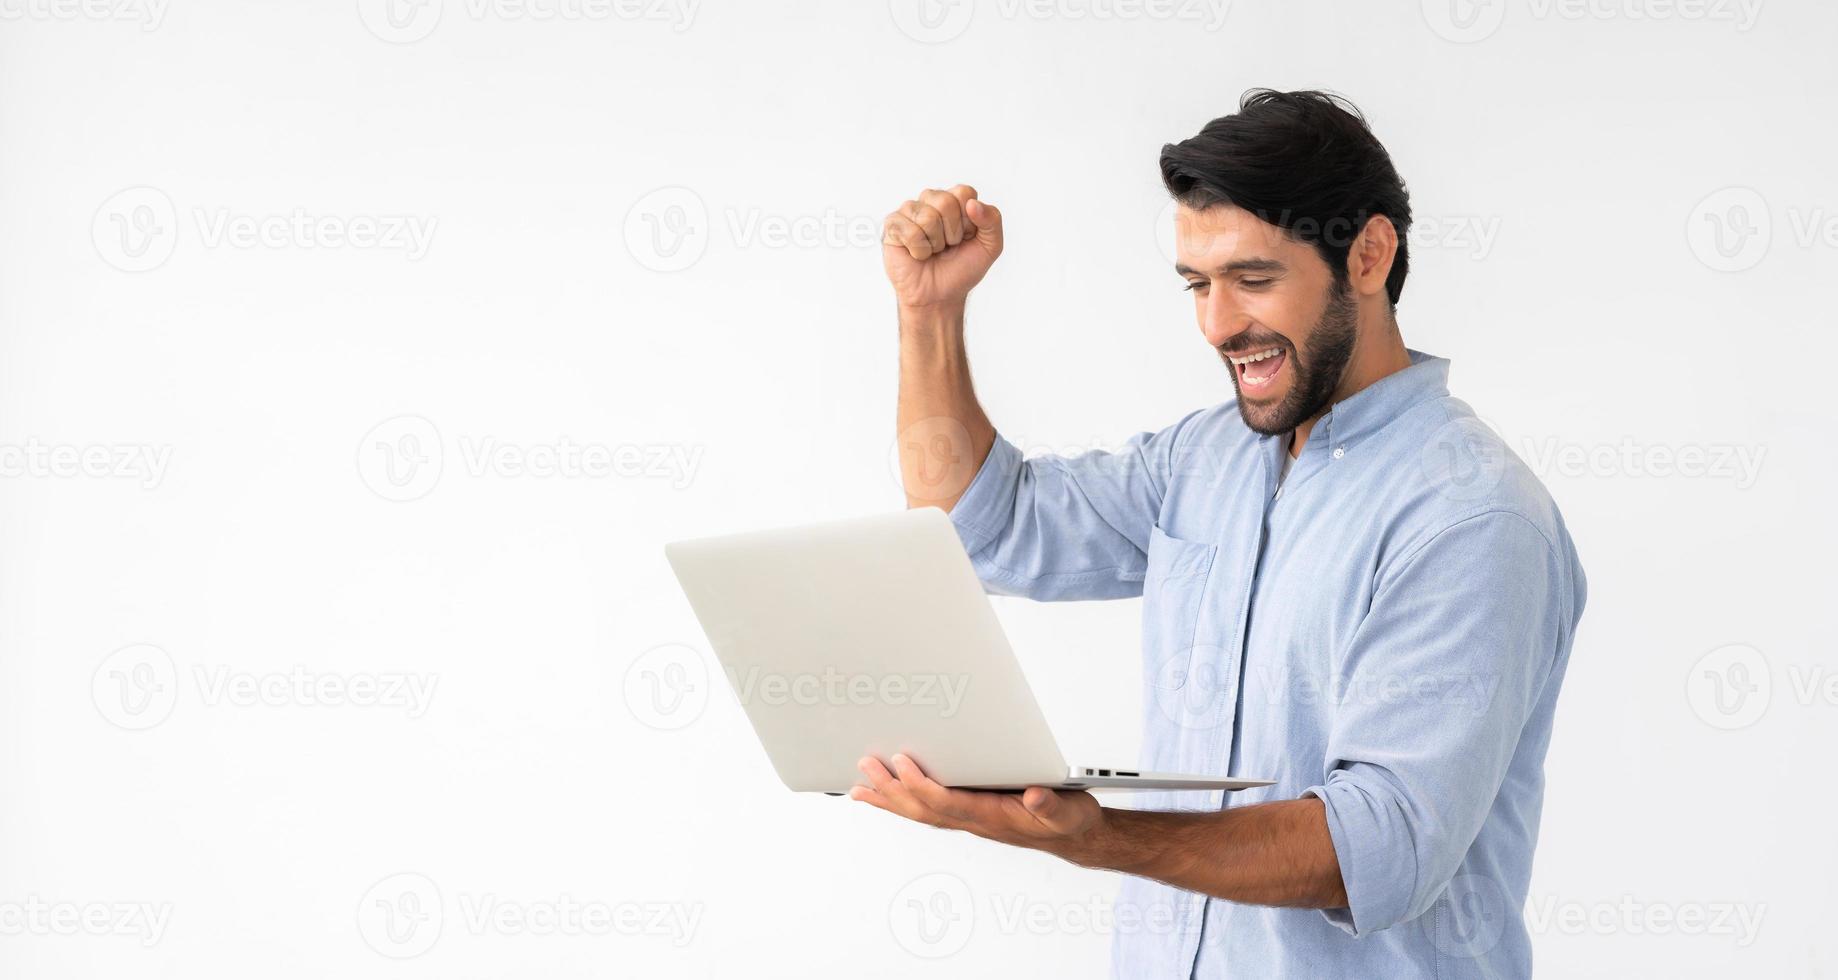 man holding laptop celebrate success photo